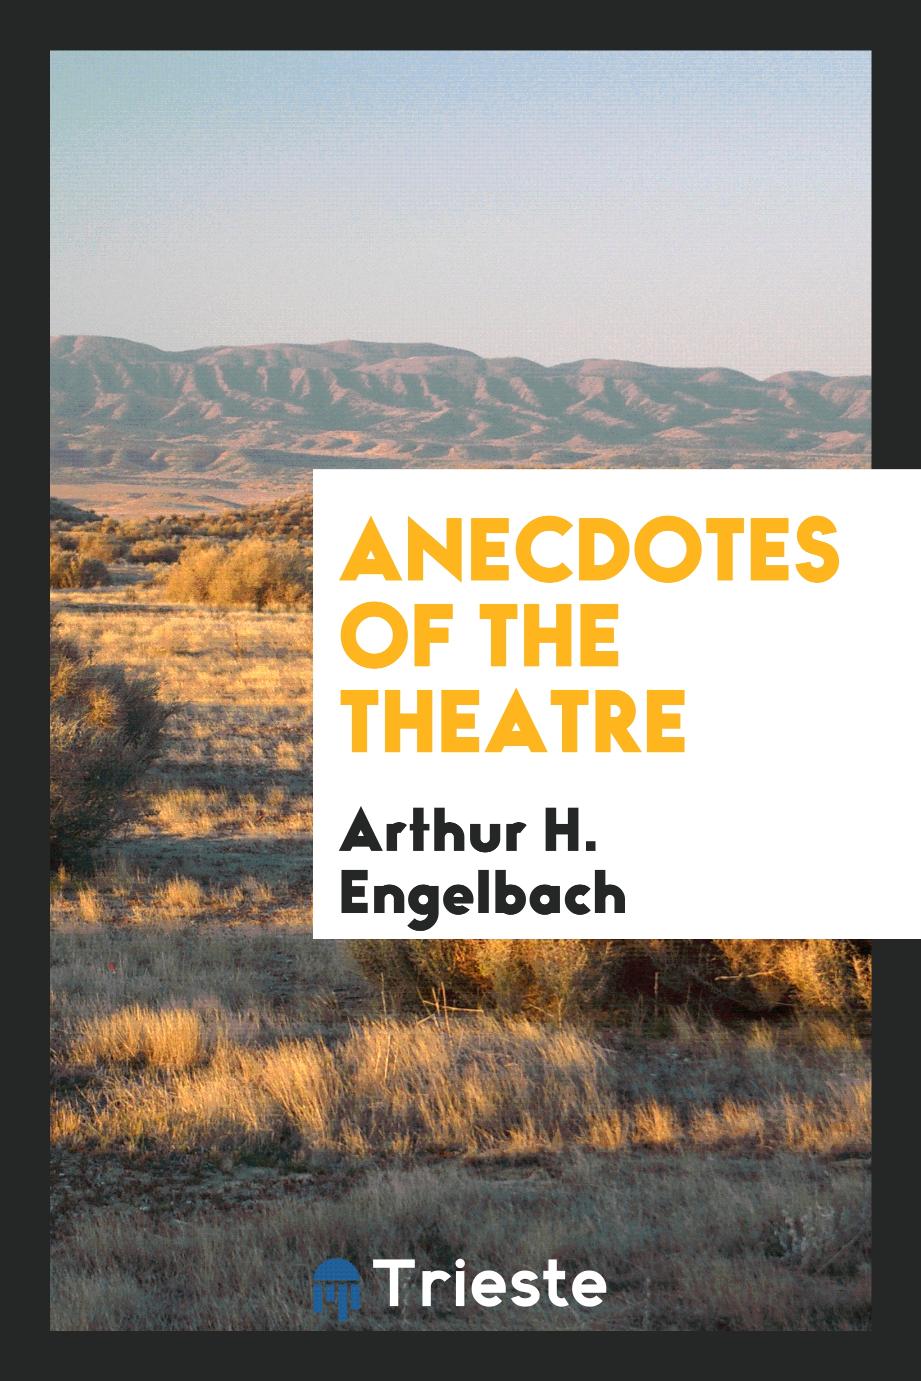 Anecdotes of the theatre